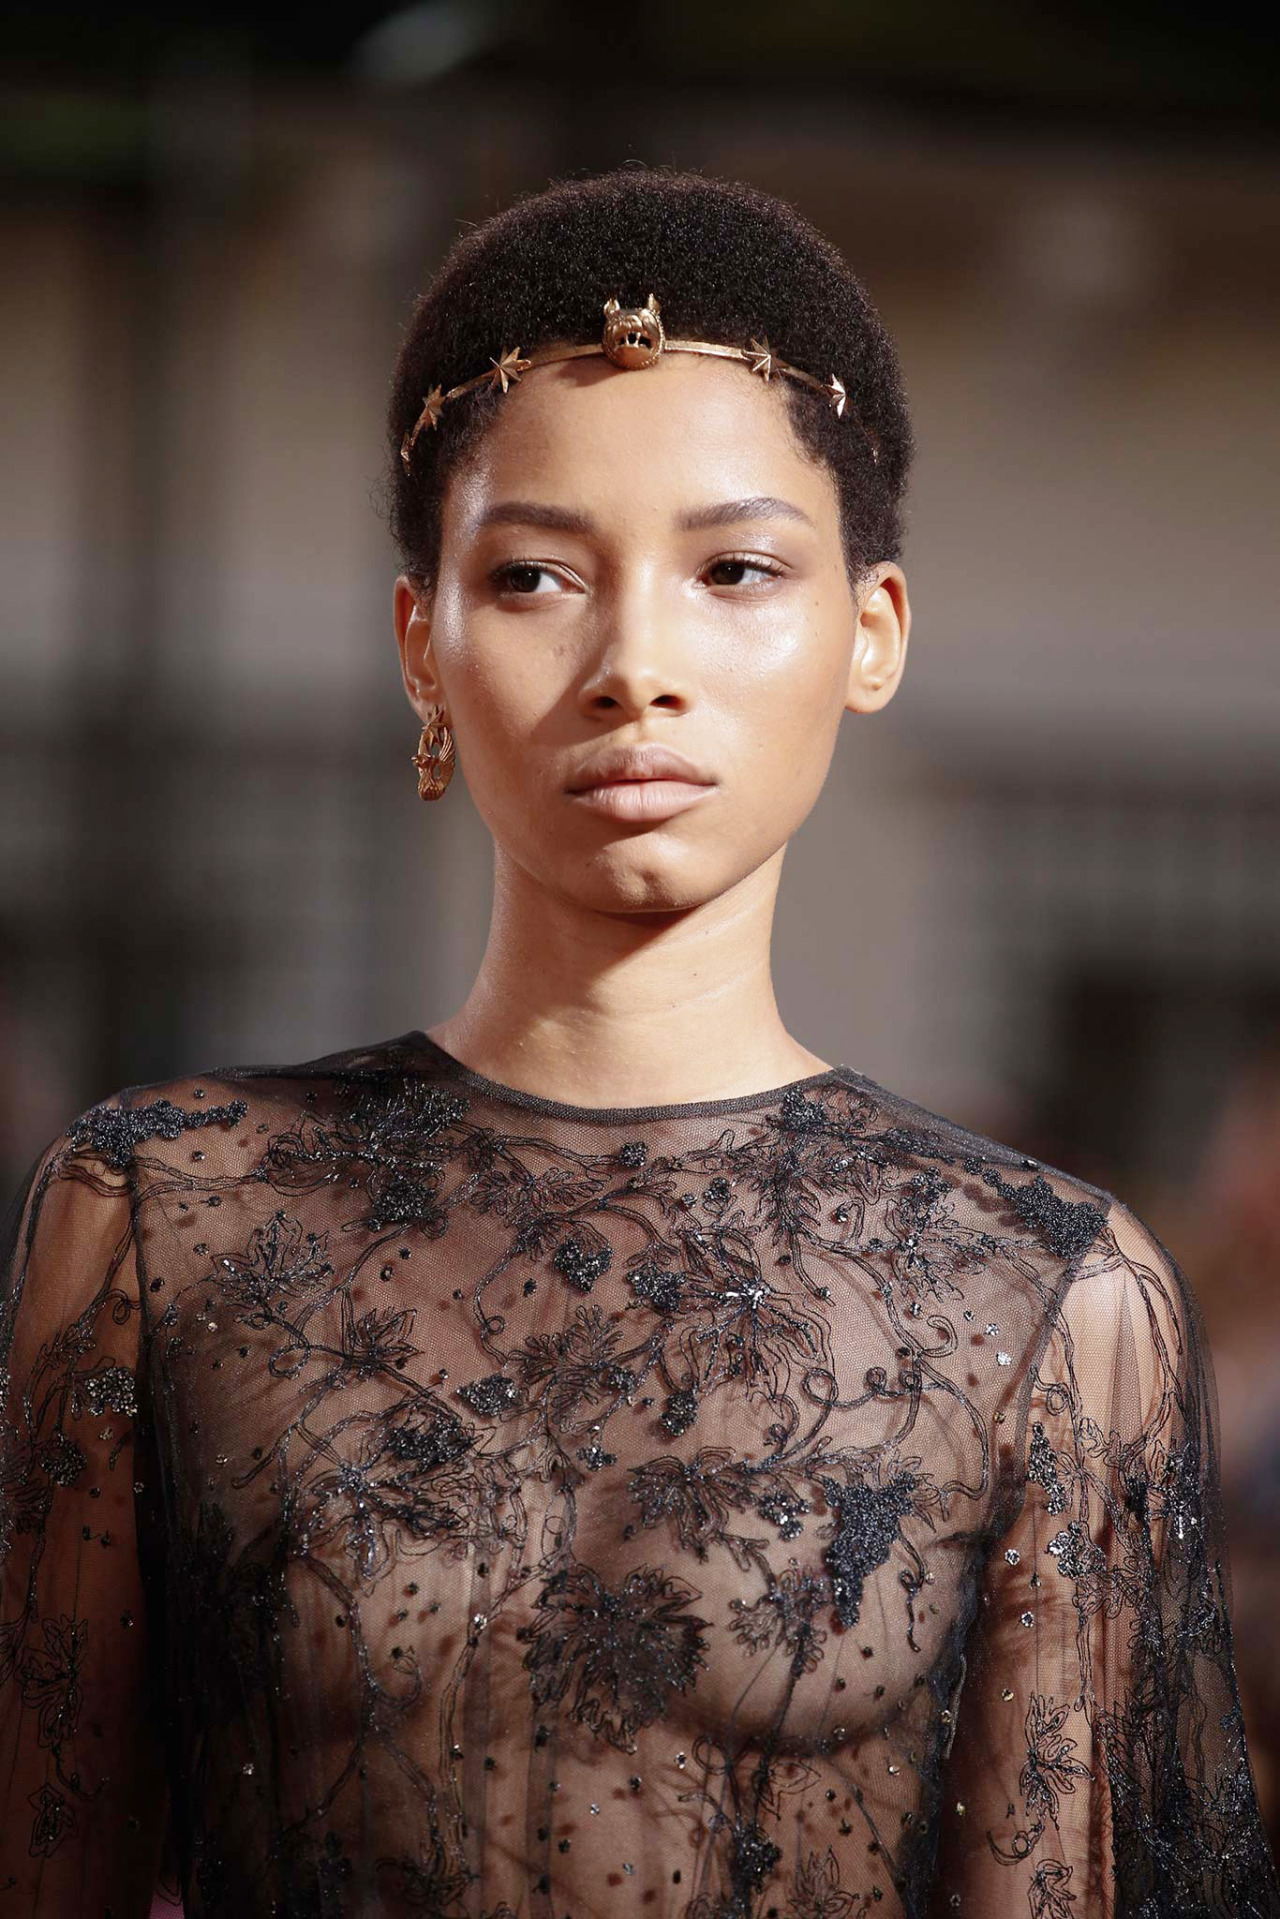 noirmodels:  black models at valentino fall 2015 couture + close-ups